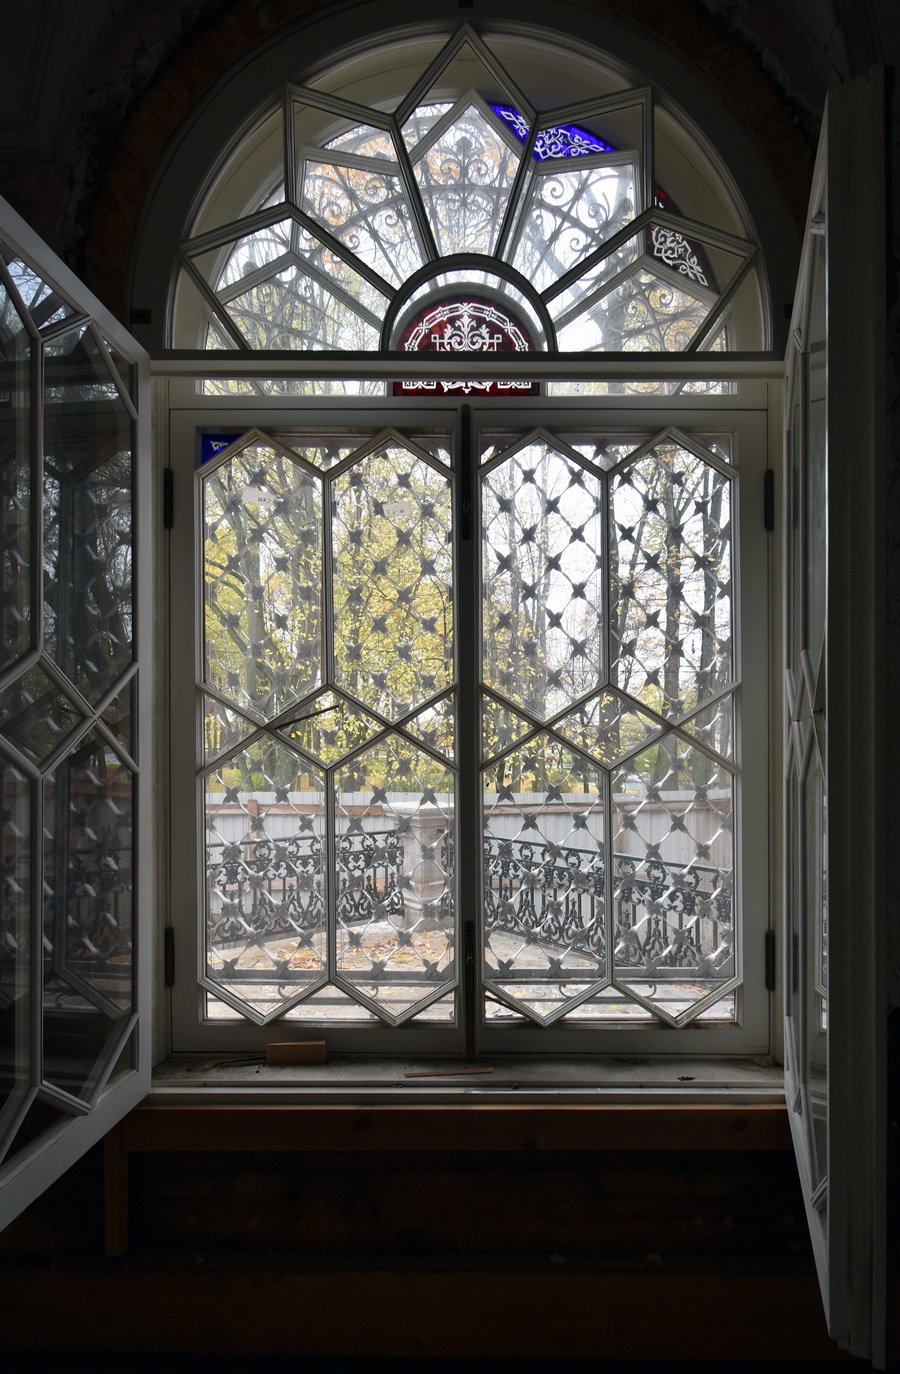 Правое окно в ризалите в особняке В. Ф. Громова. Вид изнутри. Фото С. В. Васильева, 2020